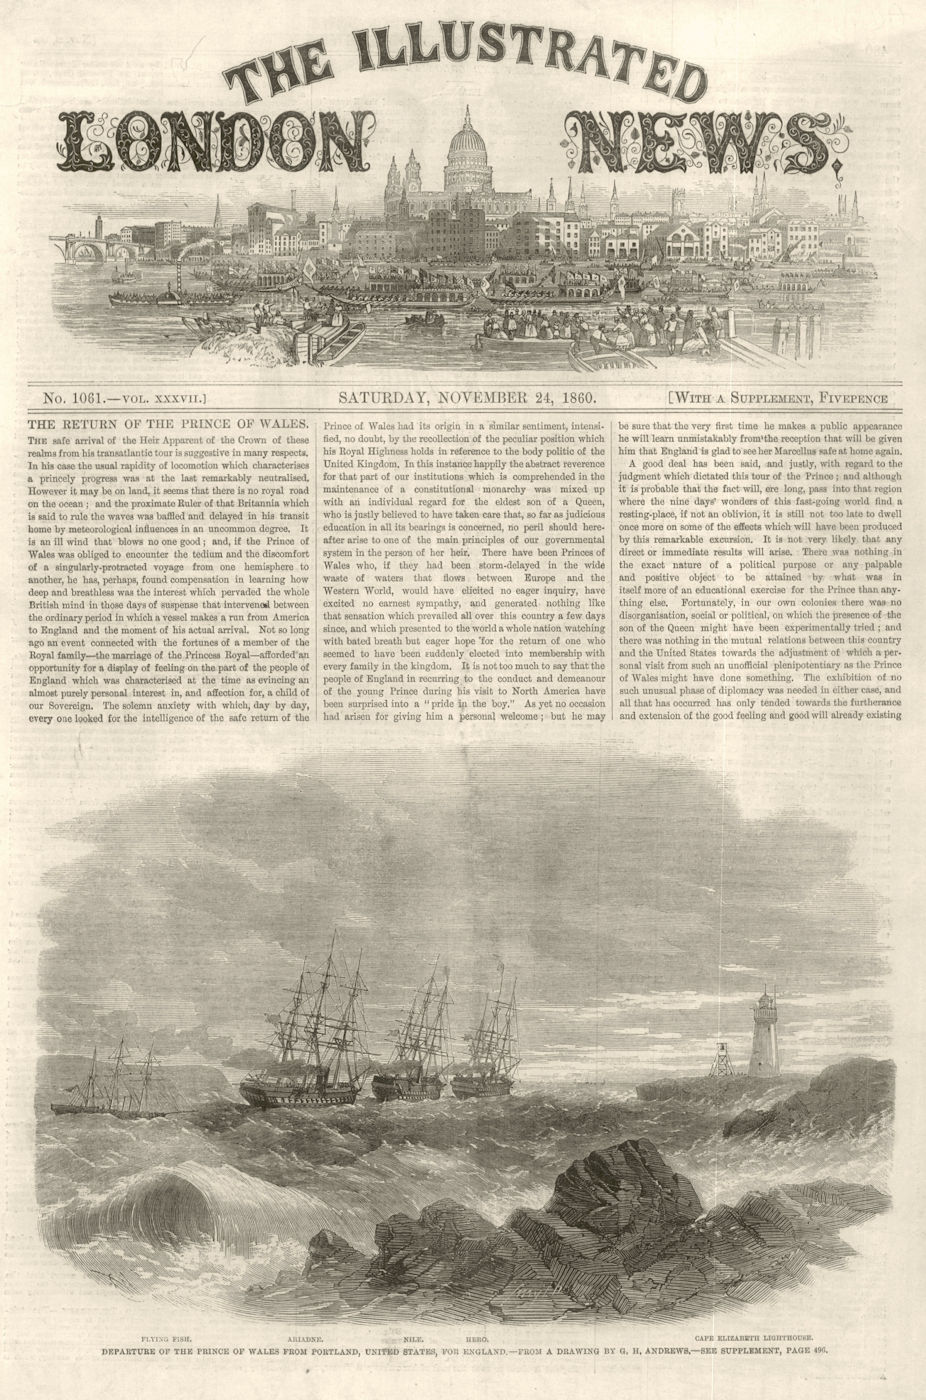 Prince of Wales leaving Portland, Maine. Cape Elizabeth Lighthouse 1860 print